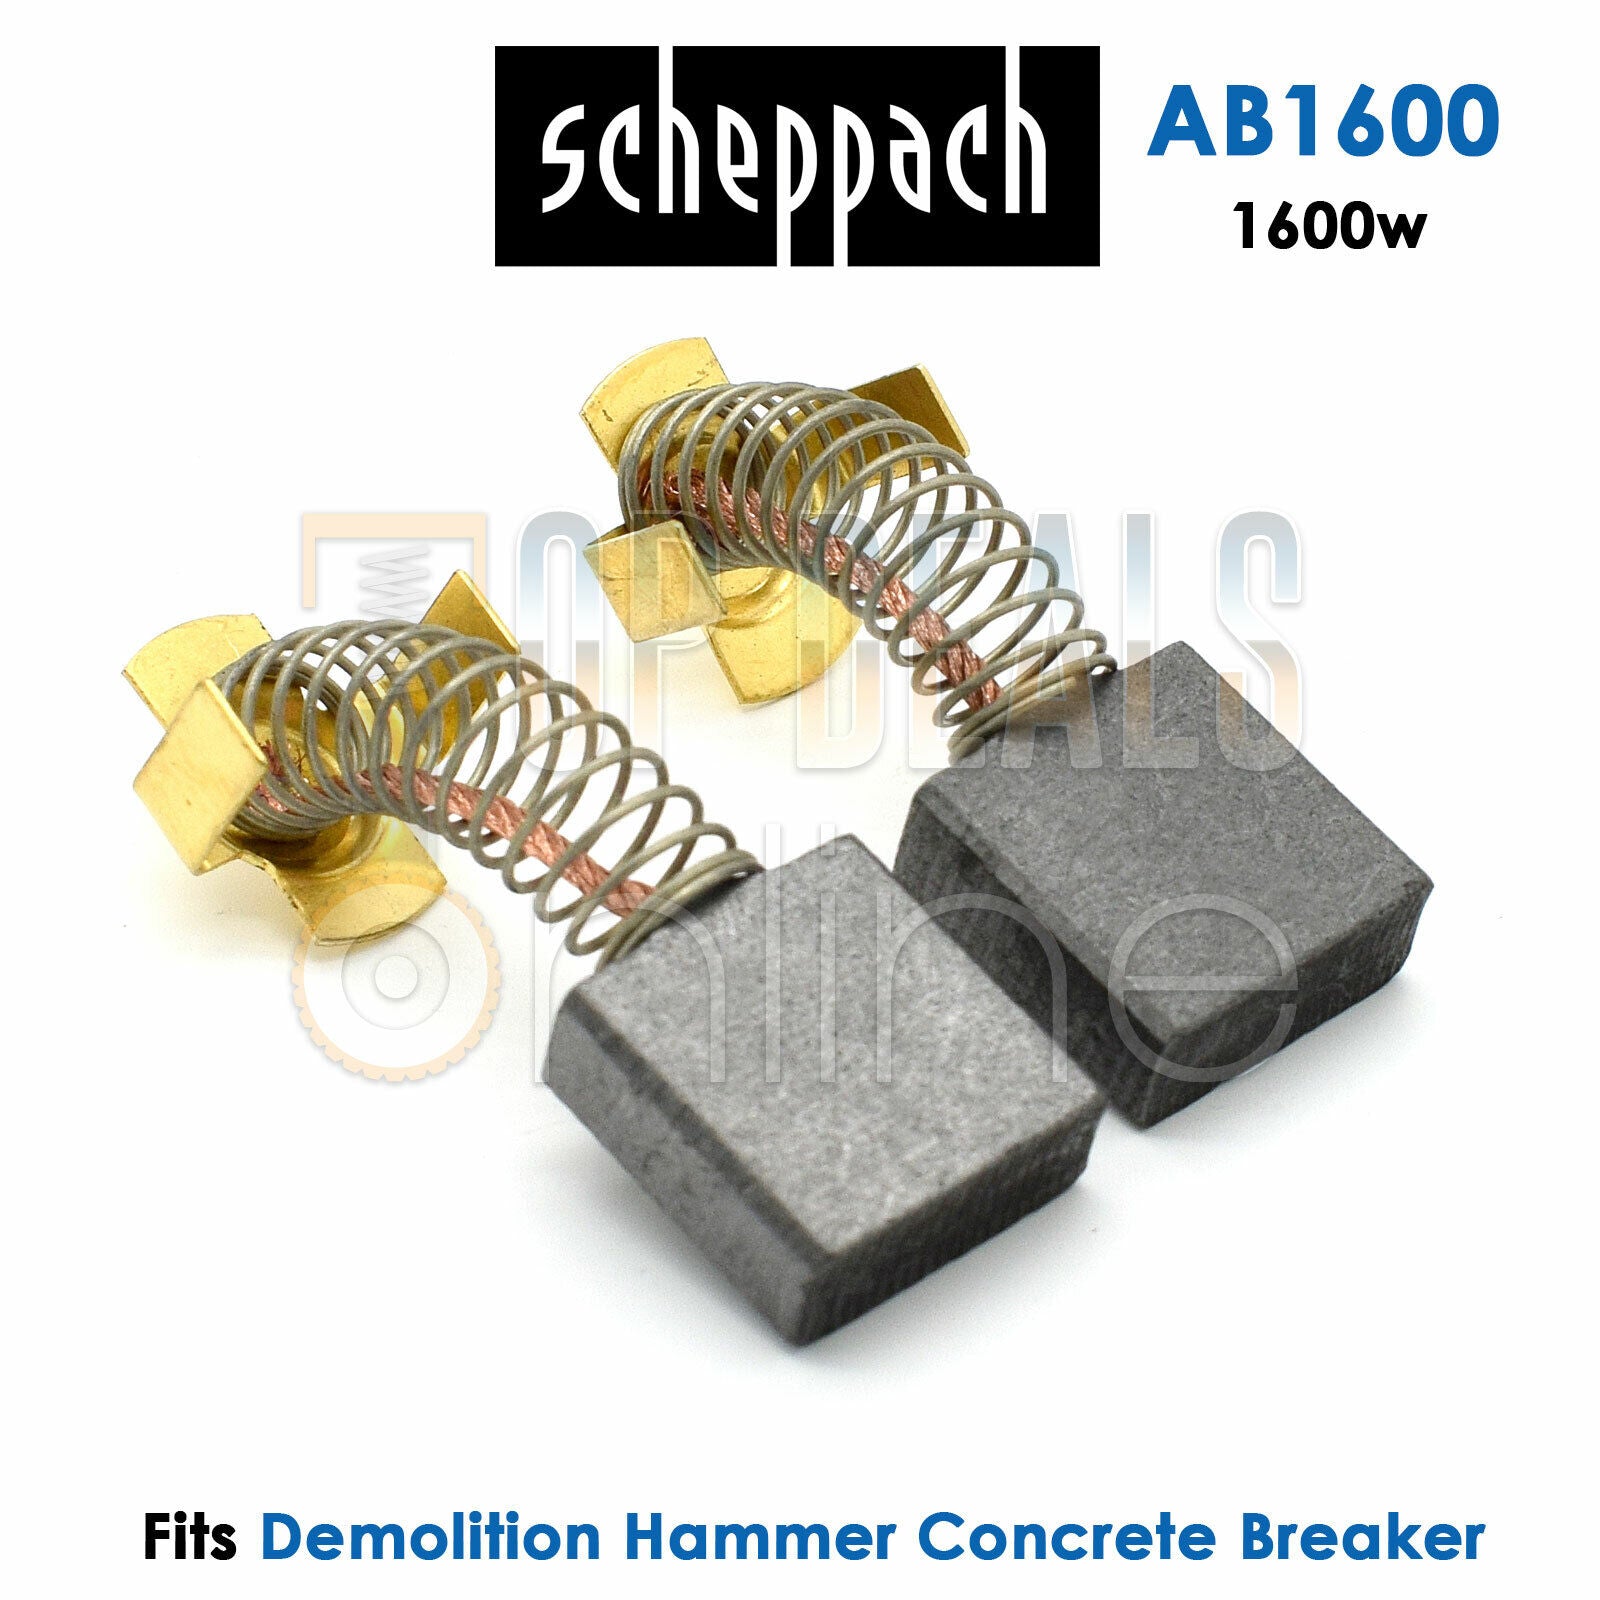 Carbon Brushes for Scheppach AB1500 AB1600 AB1700 Demolition Concrete Breakers